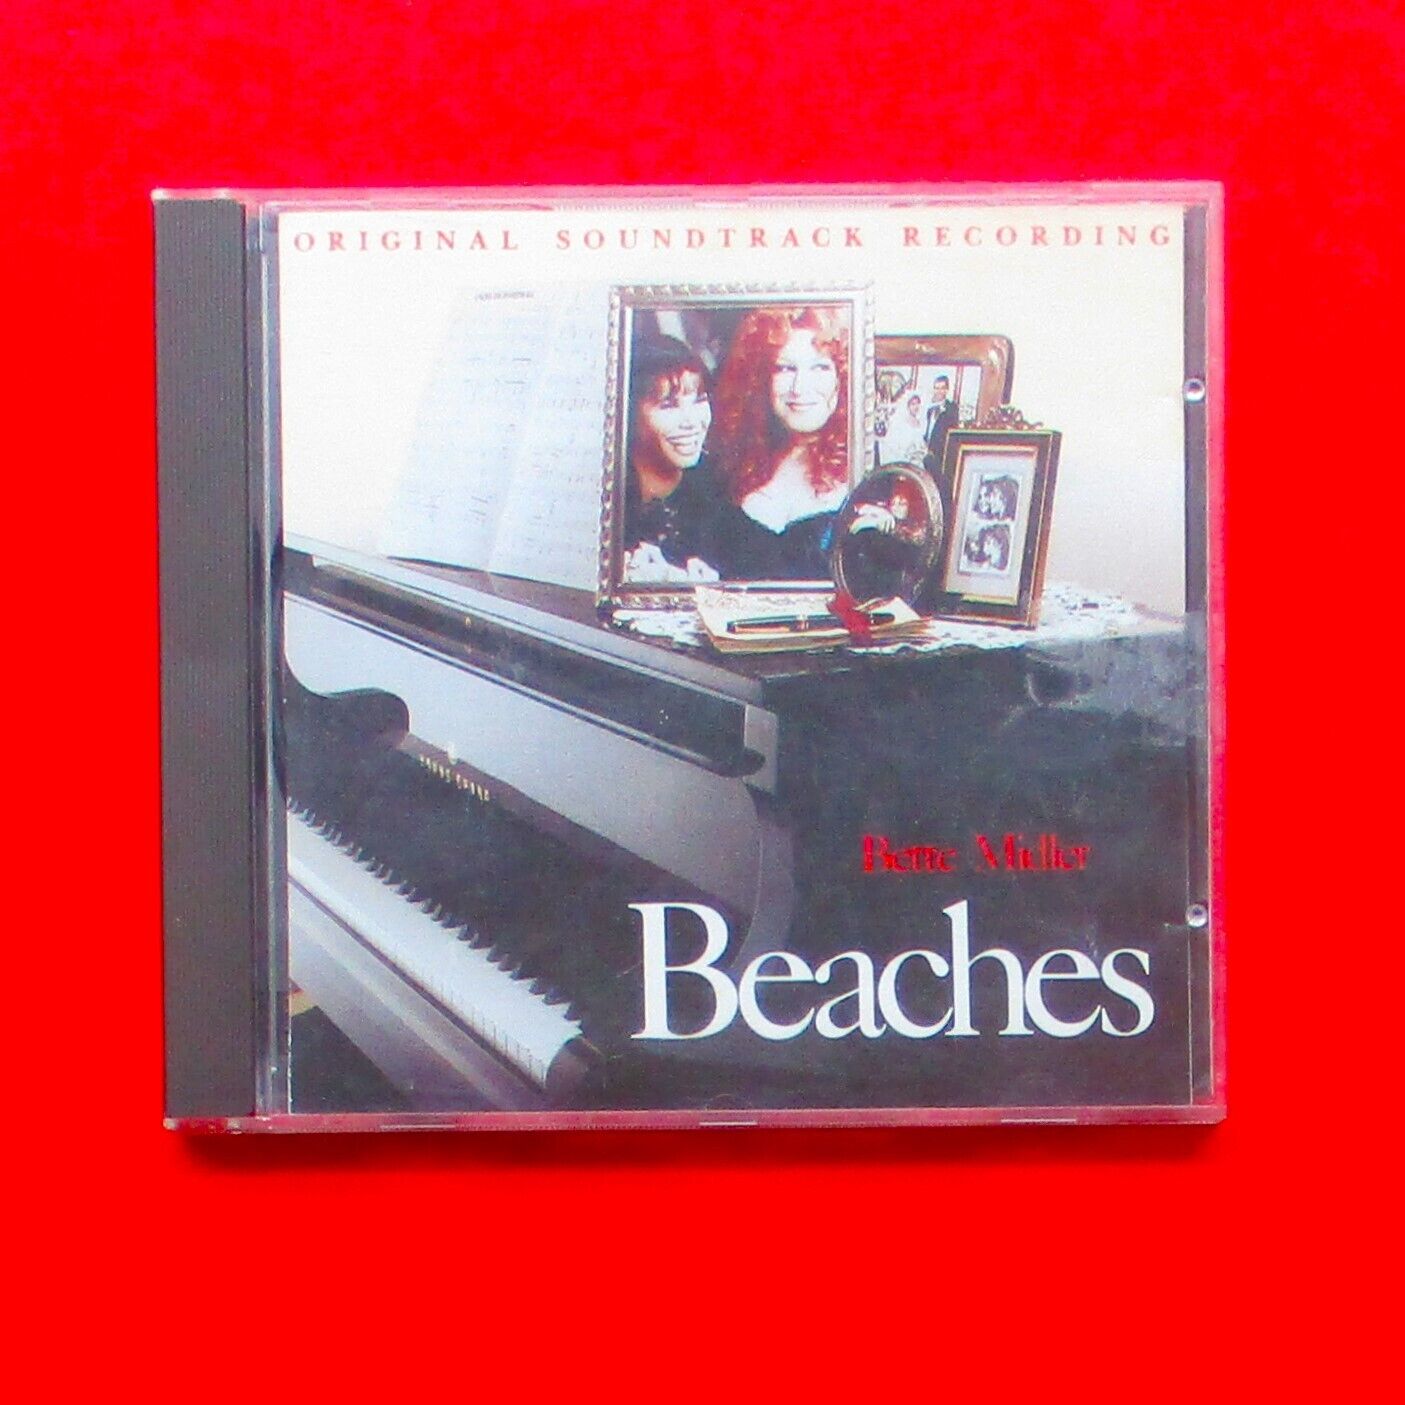 Bette Midler Beaches (Original Soundtrack Recording) Australian CD Album